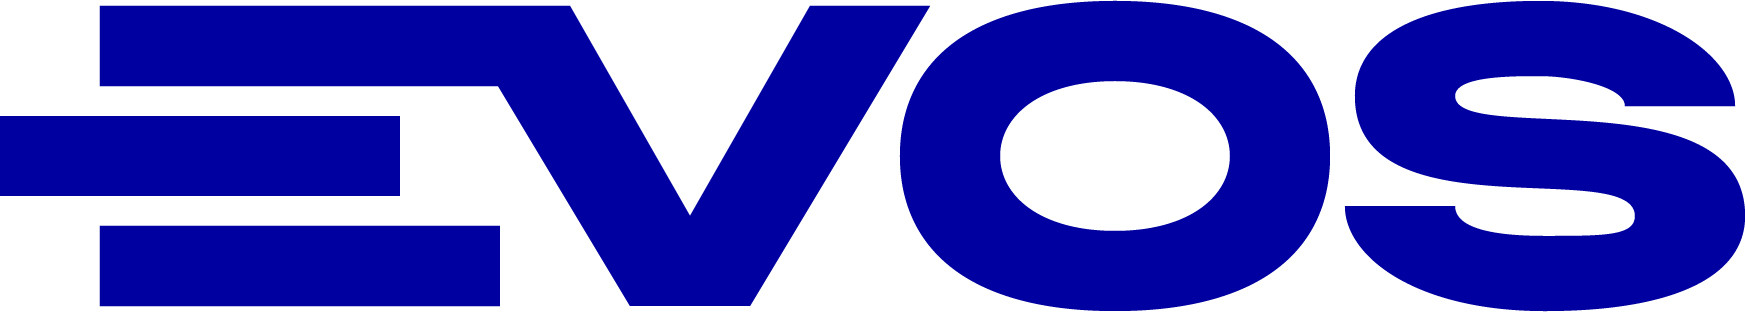 feb-Evos-Logotype-Electric-Blue-RGB